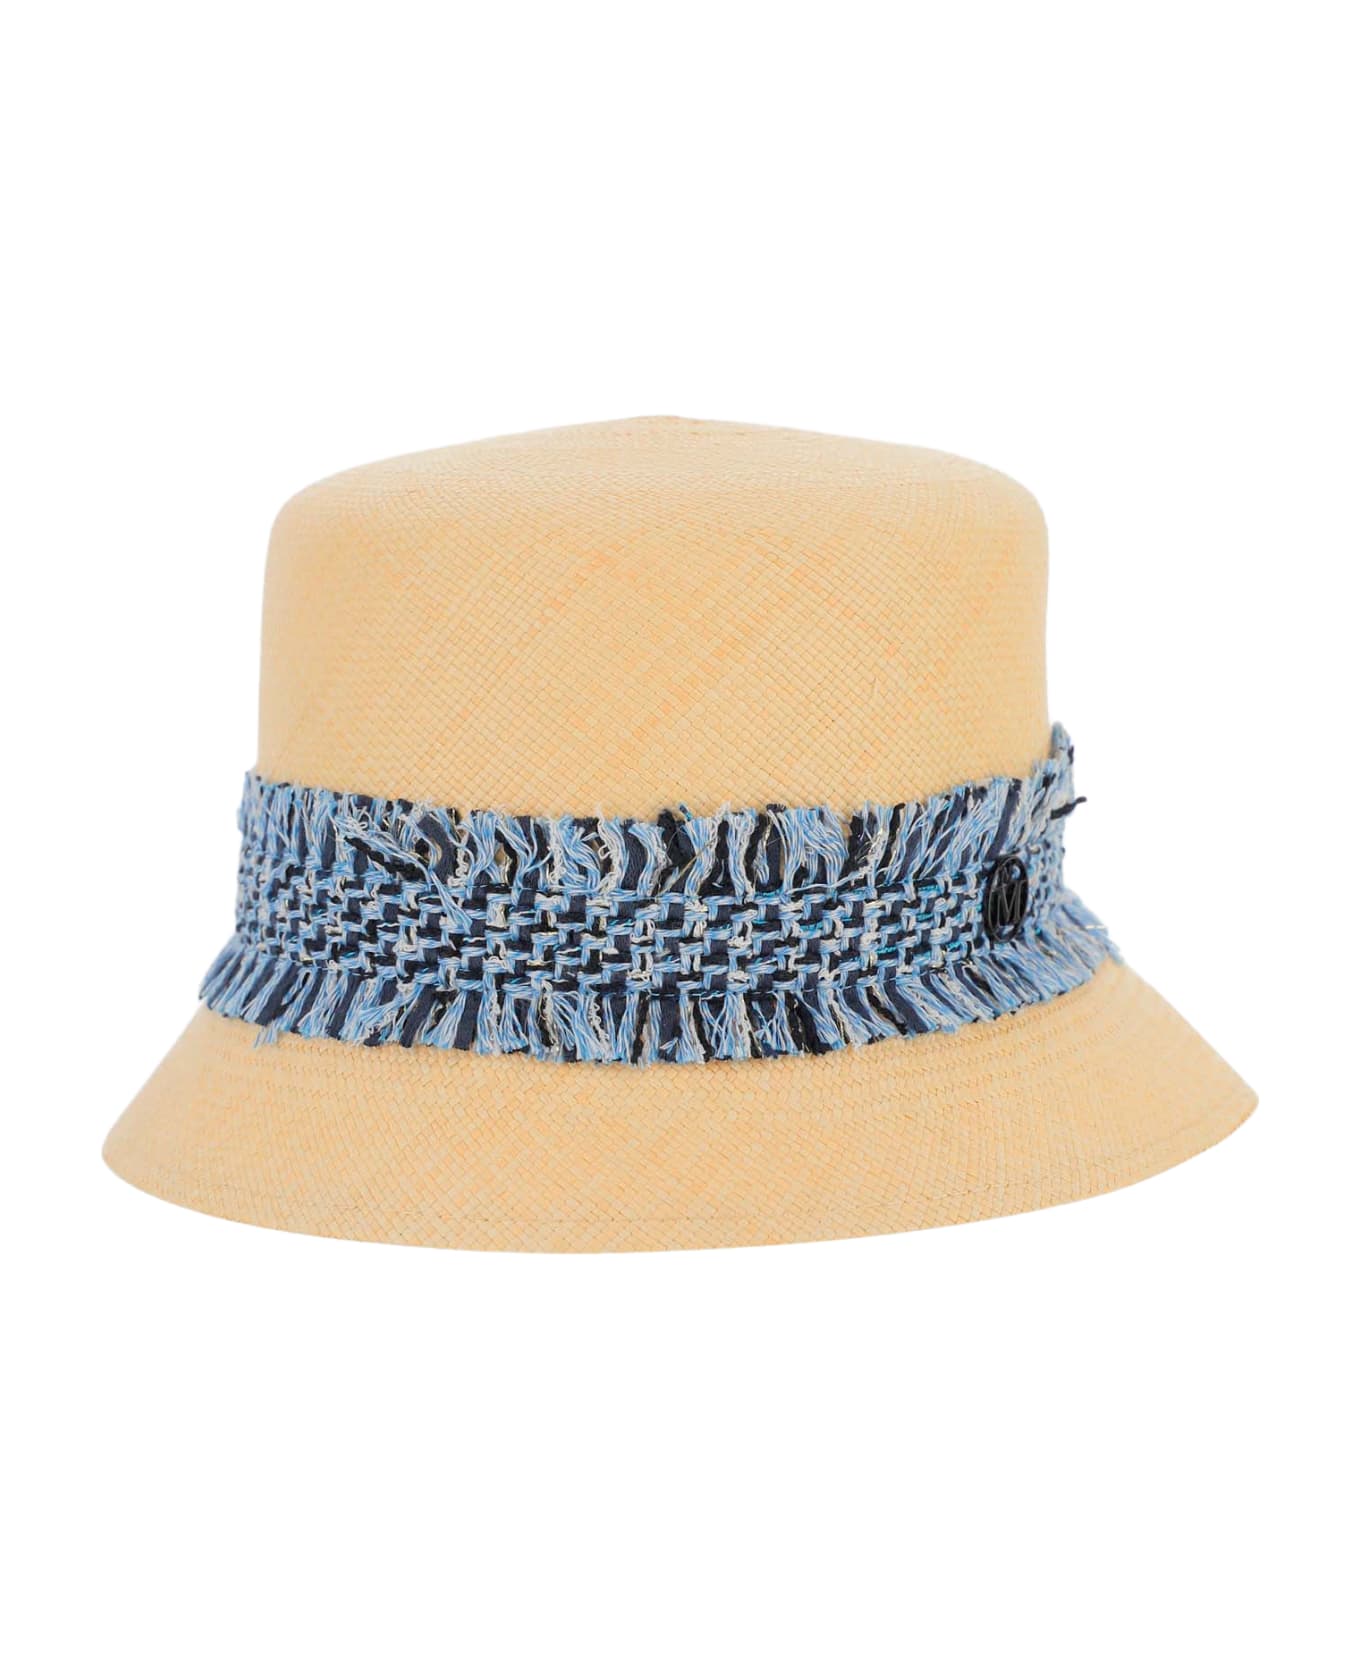 Maison Michel Mini New Kendall Hat - Beige